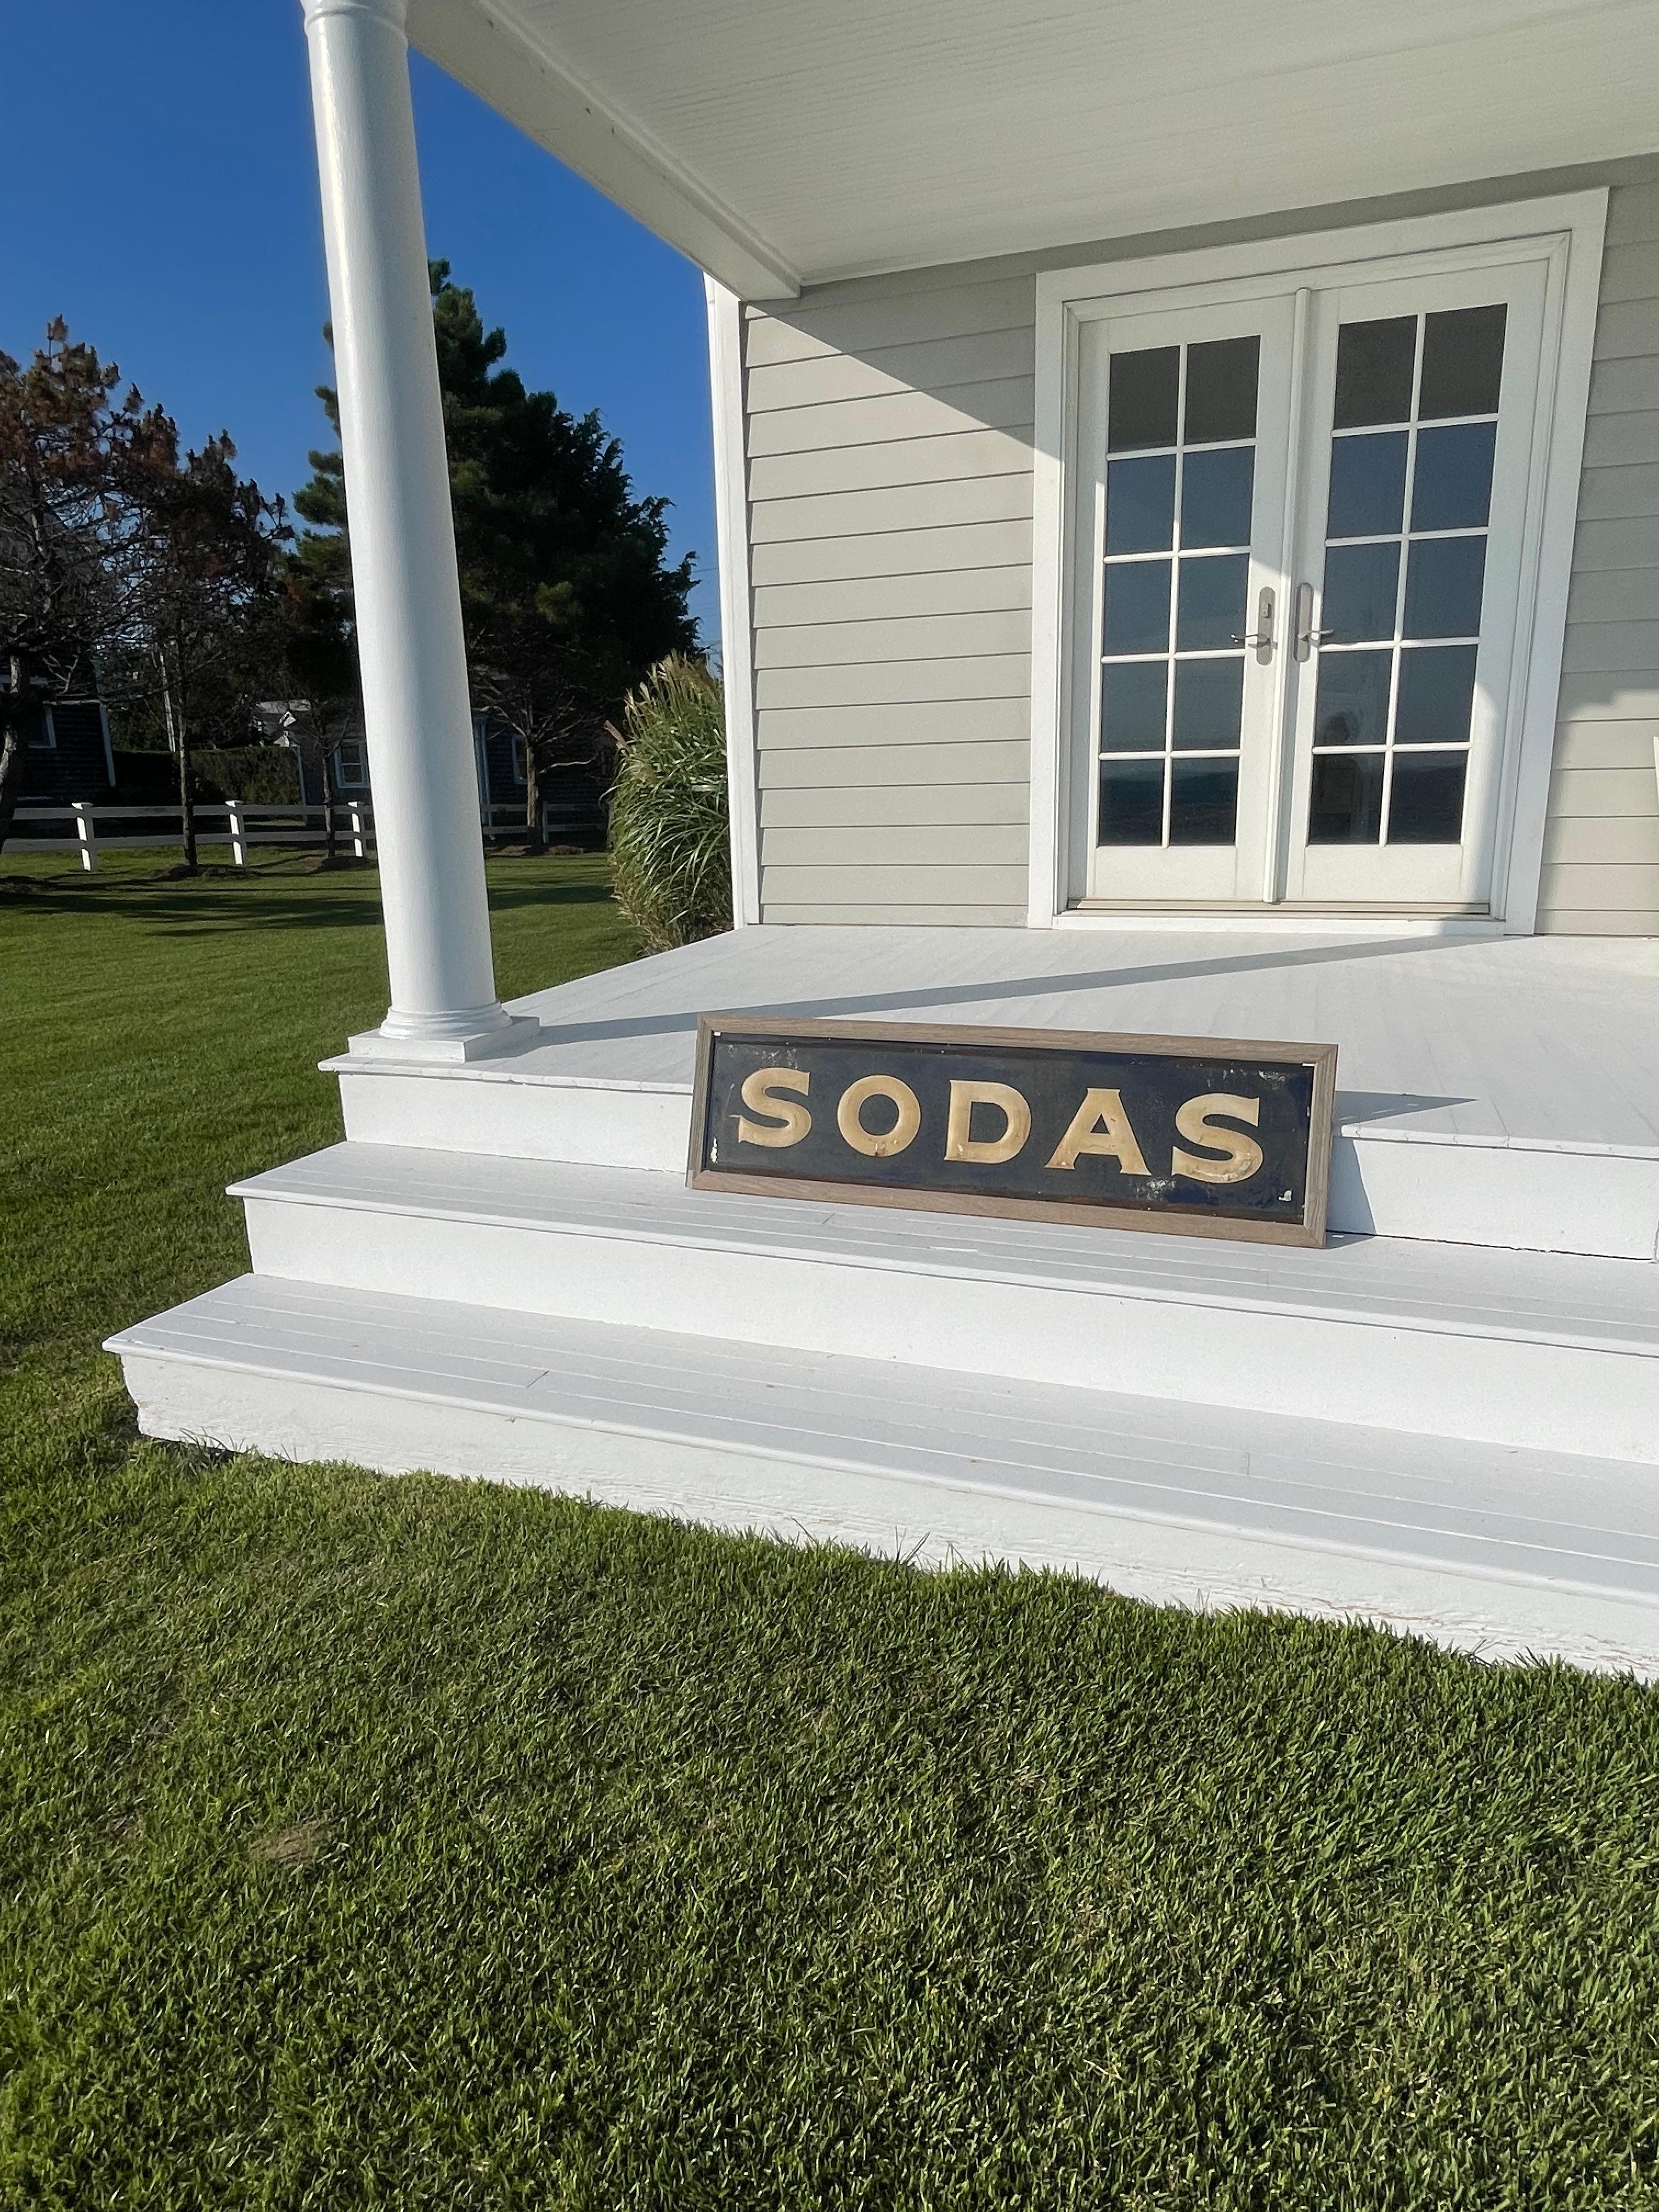 American Classical Vintage Advertising “SODAS” Metal Embossed Sign For Sale